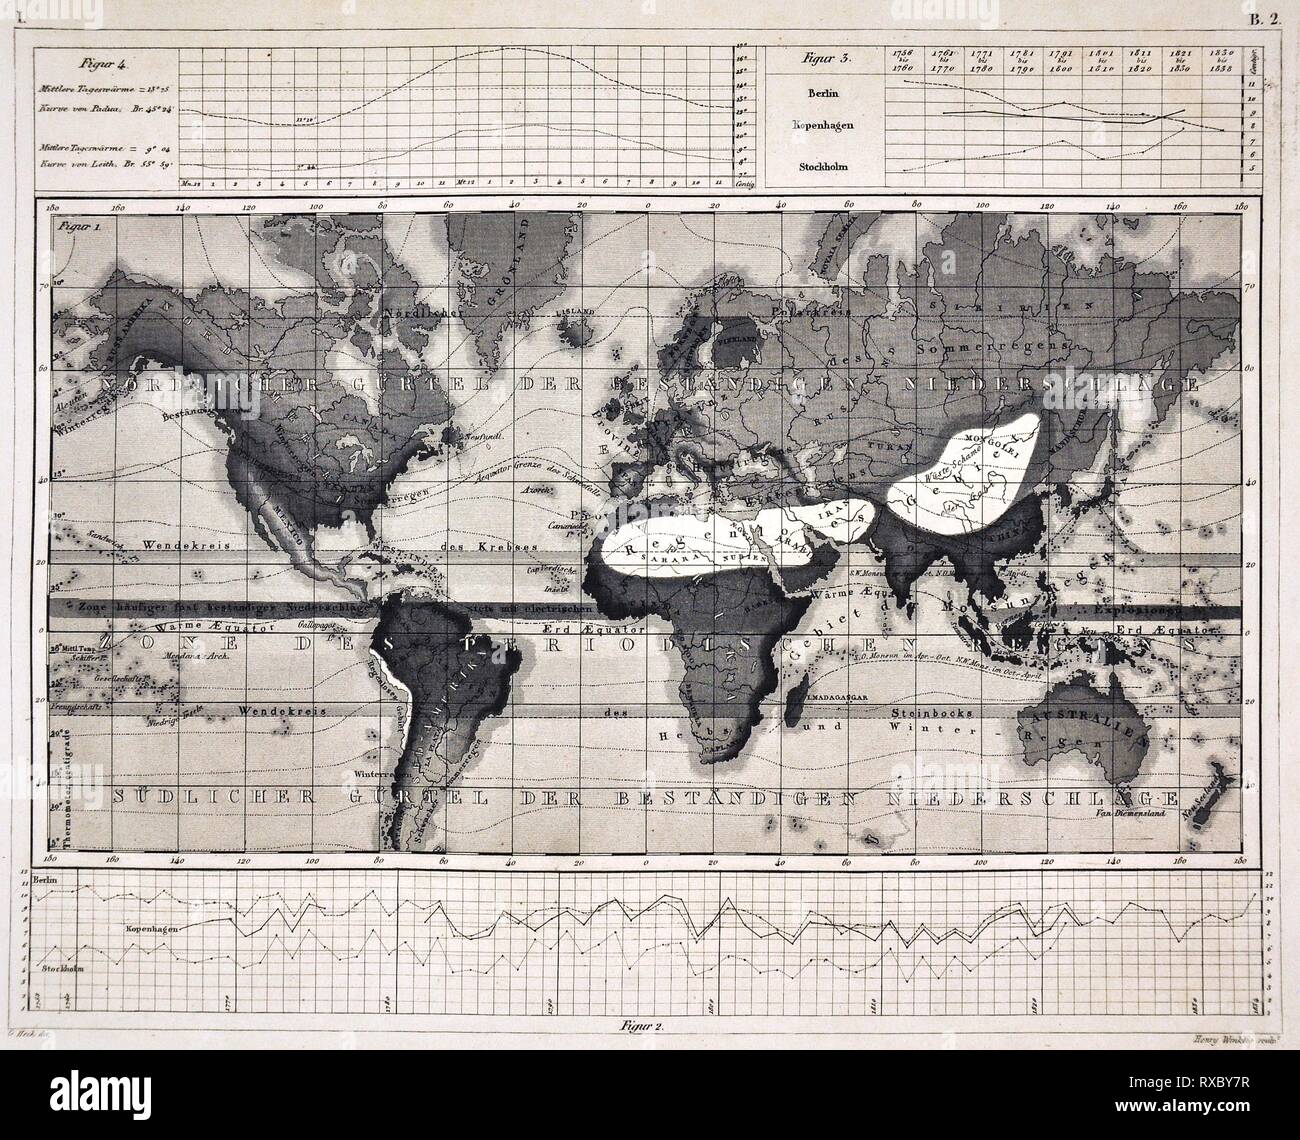 1849 Bilder Atlas Map World Rainfall and Climate Zones Stock Photo